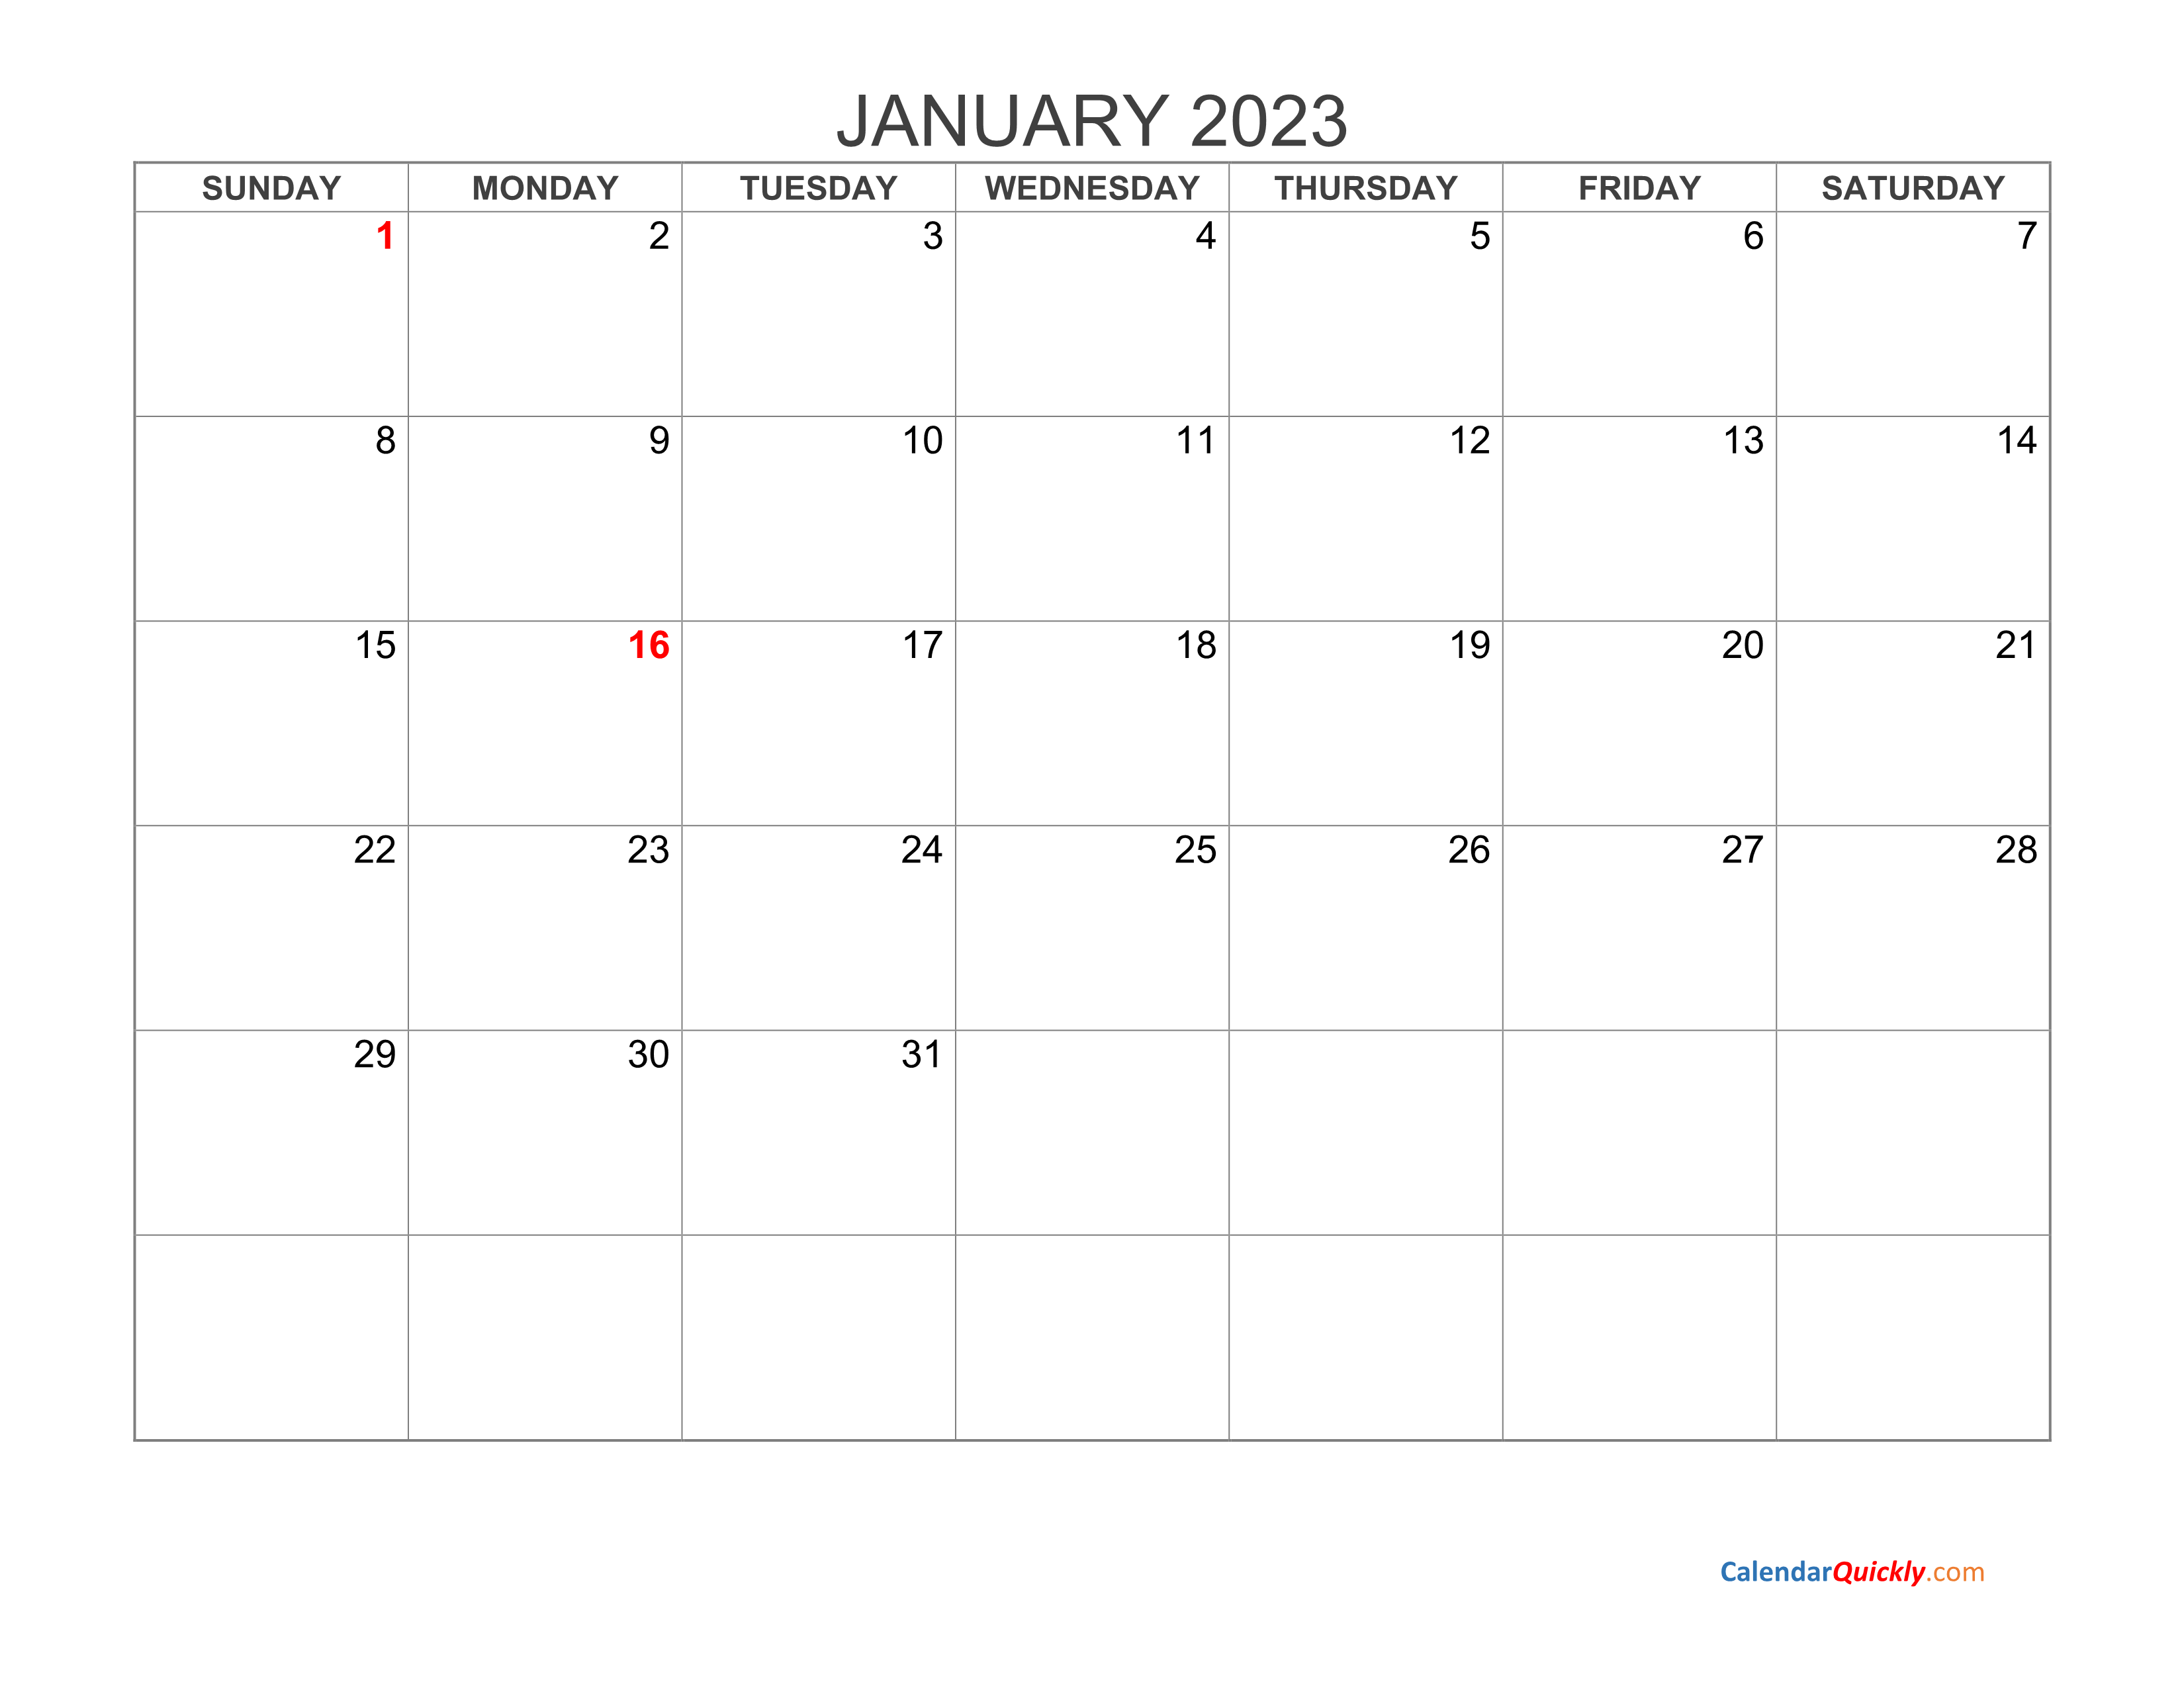 monthly-2023-blank-calendar-calendar-quickly